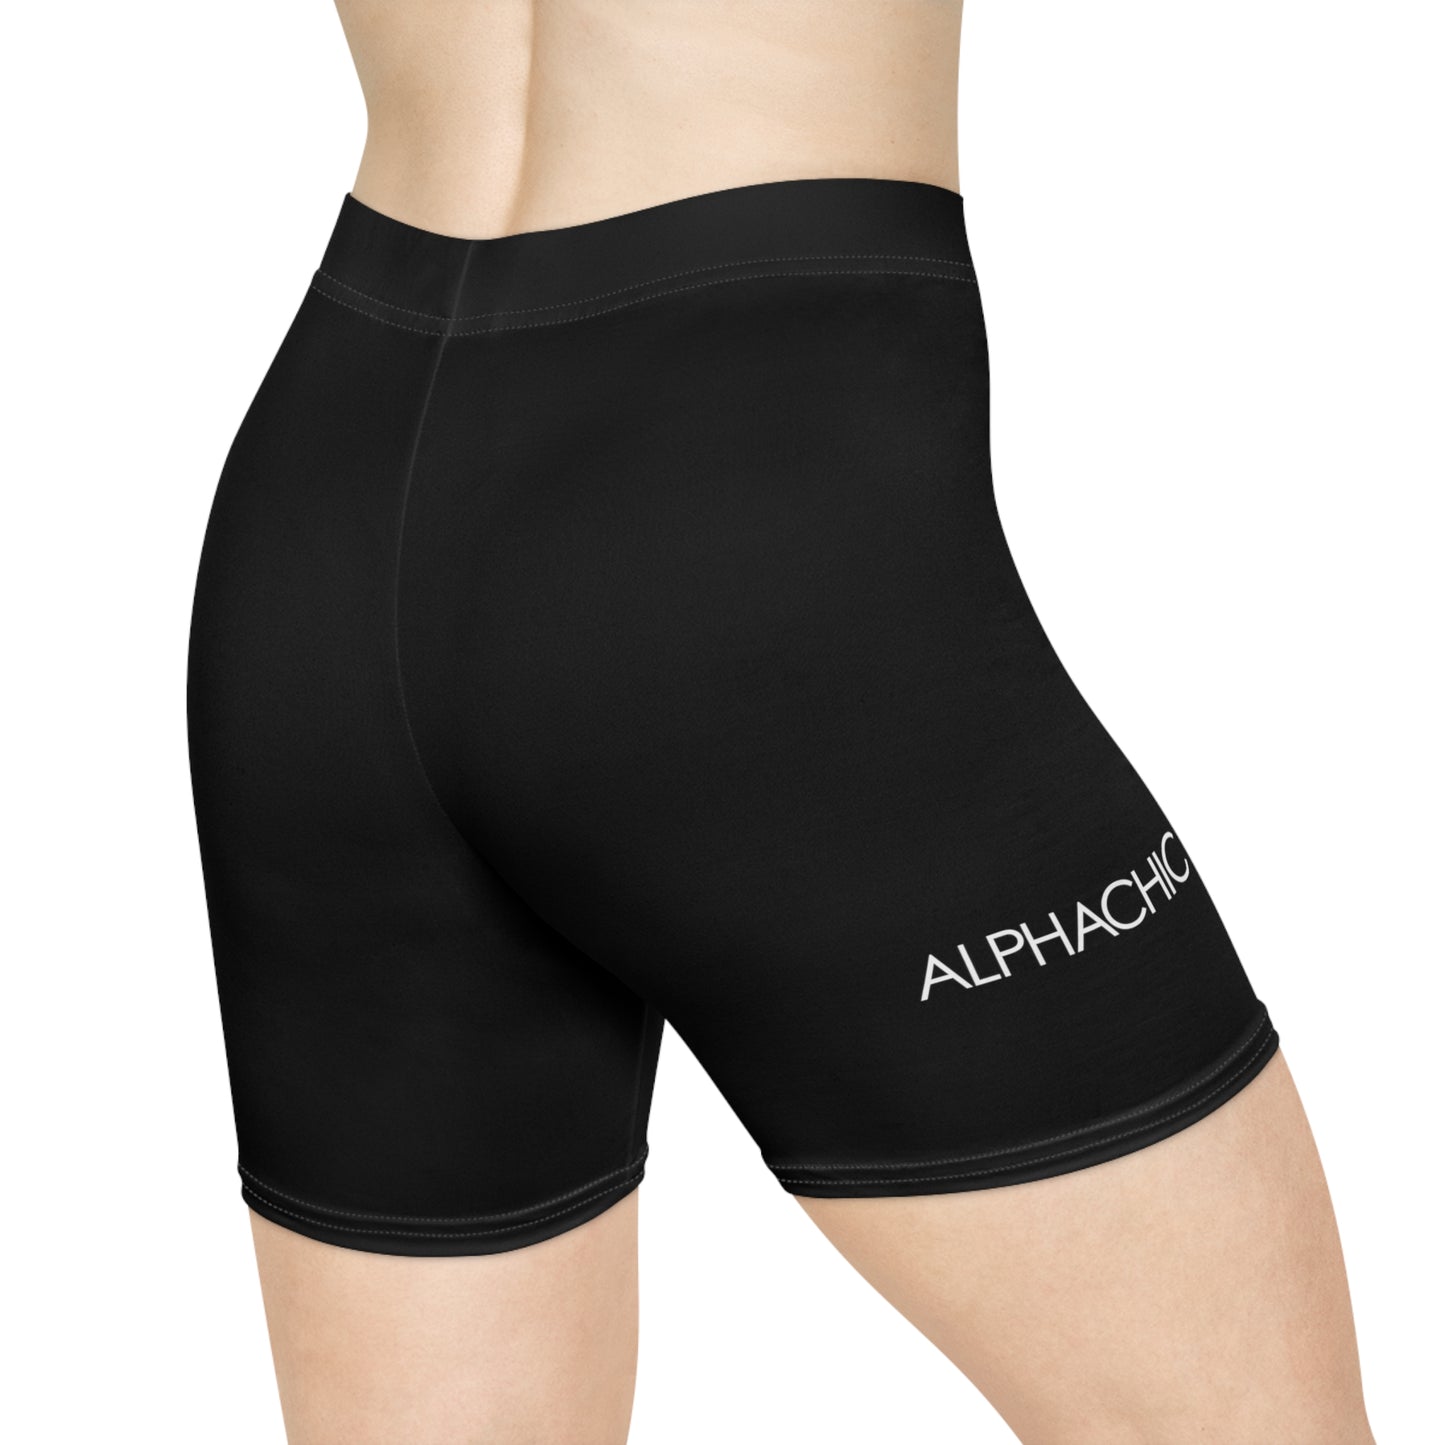 AlphaChic Biker Shorts - Black (Leg Logo)